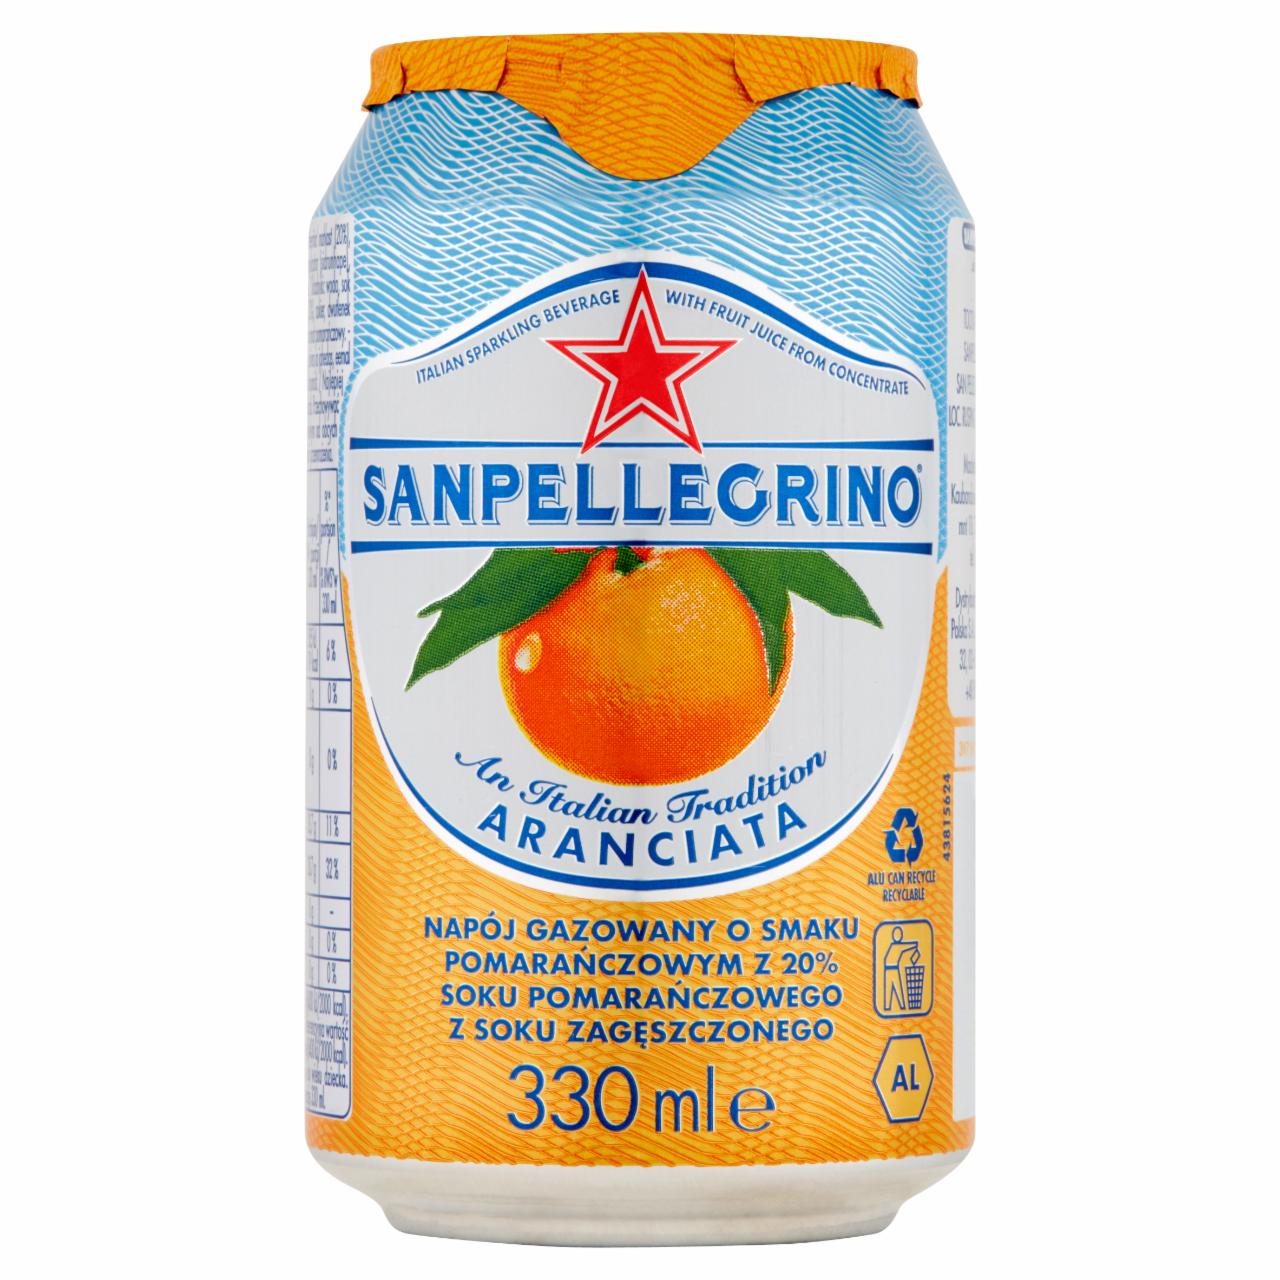 Photo - Sanpellegrino Aranciata Sparkling Orange Beverage 330 ml